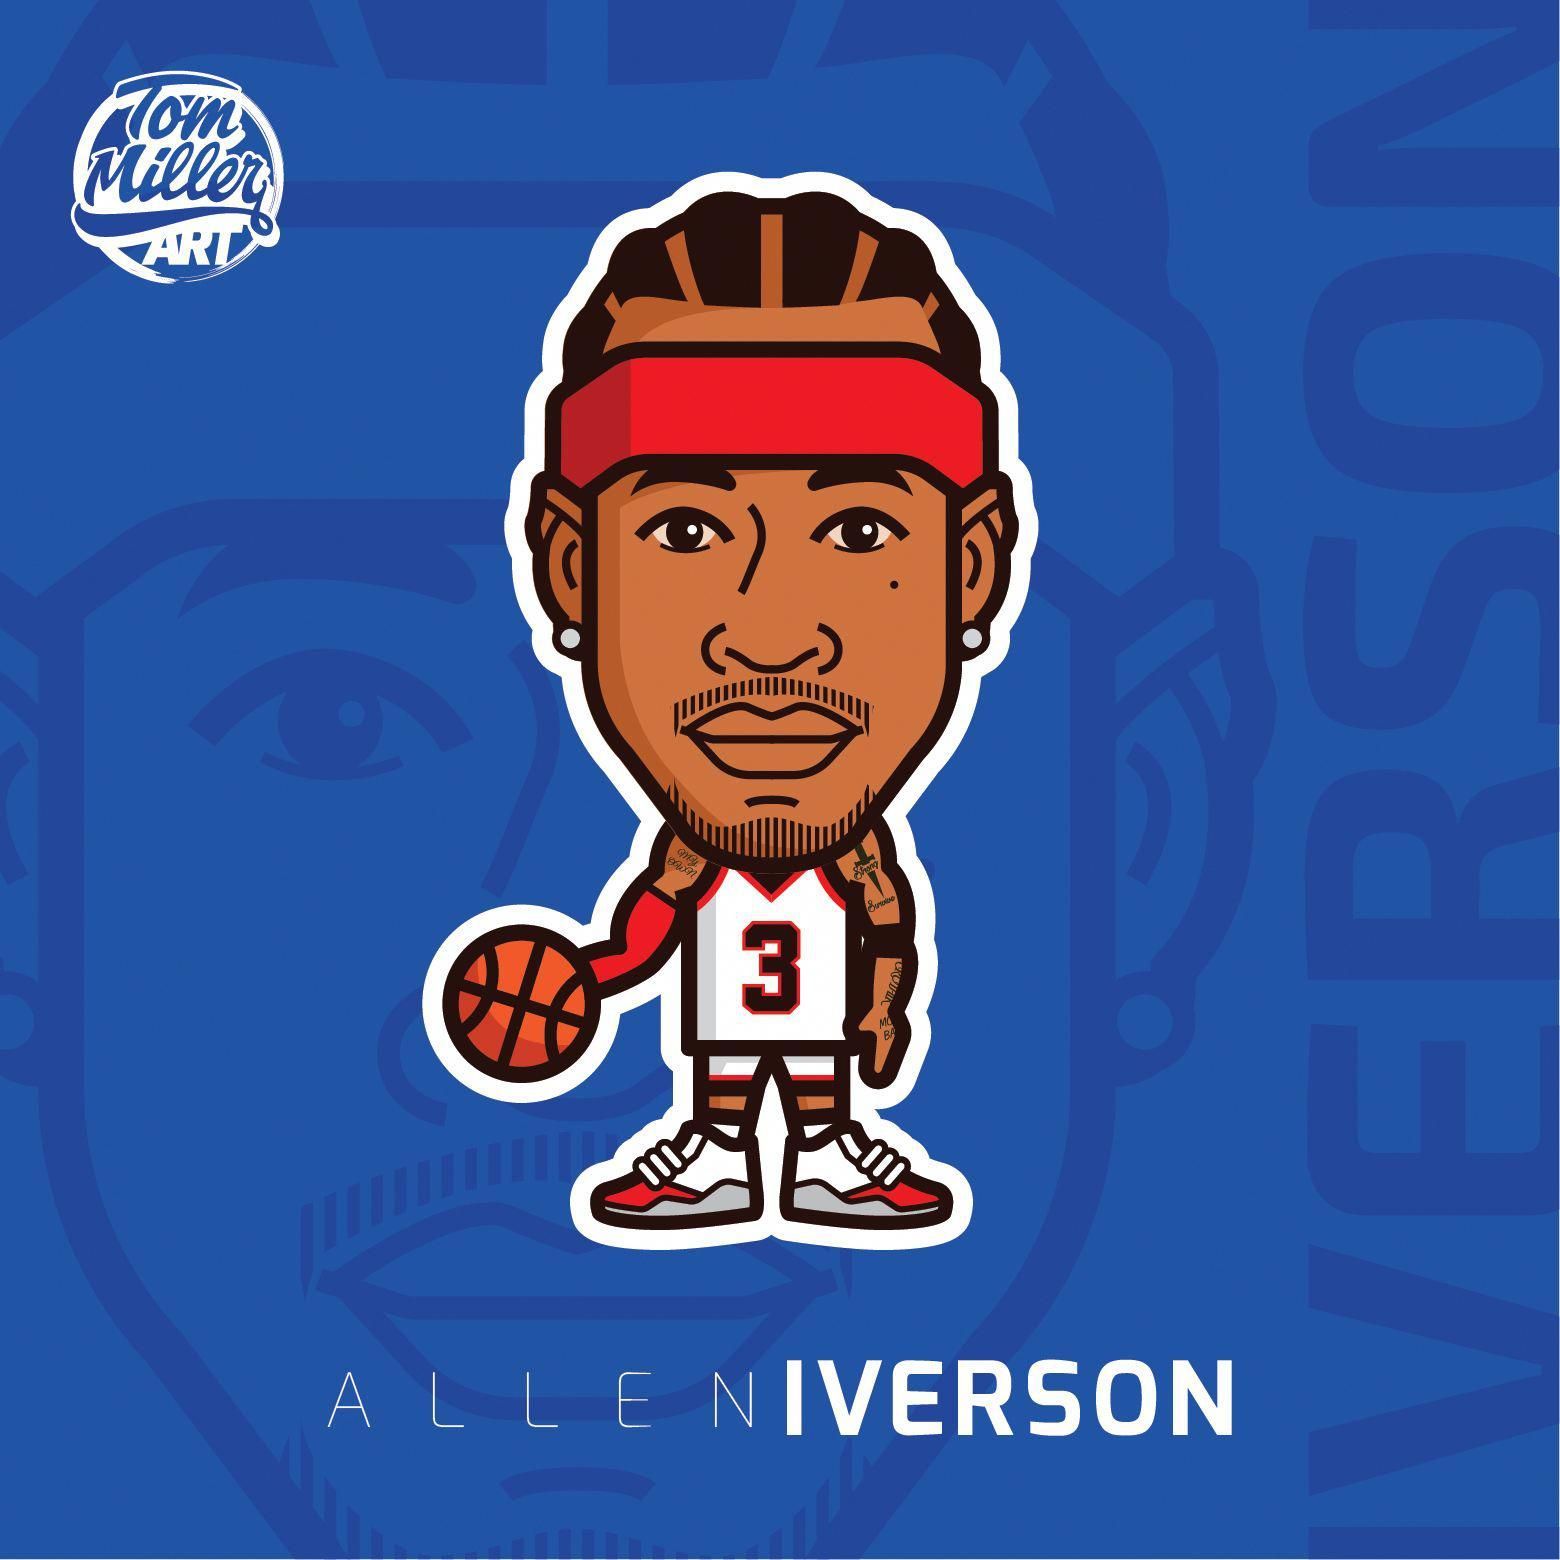 Allen Iverson Cartoon #allen #iverson #alleniverson #nba